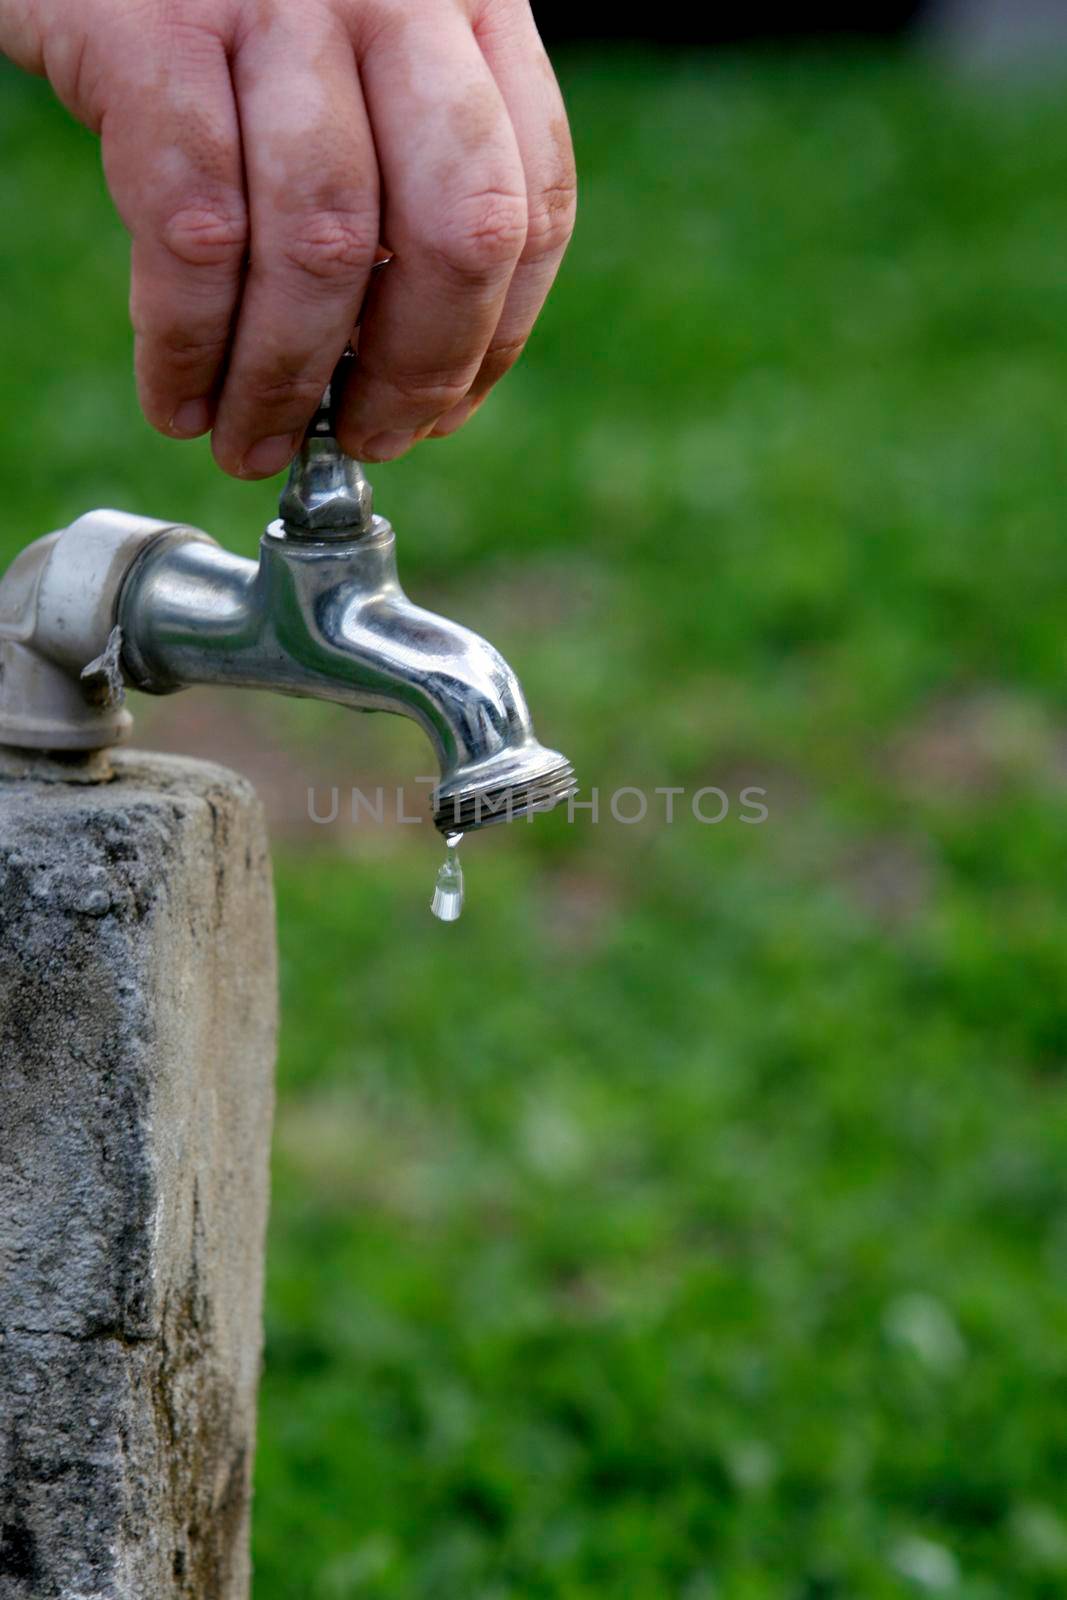 faucet leaking water by joasouza